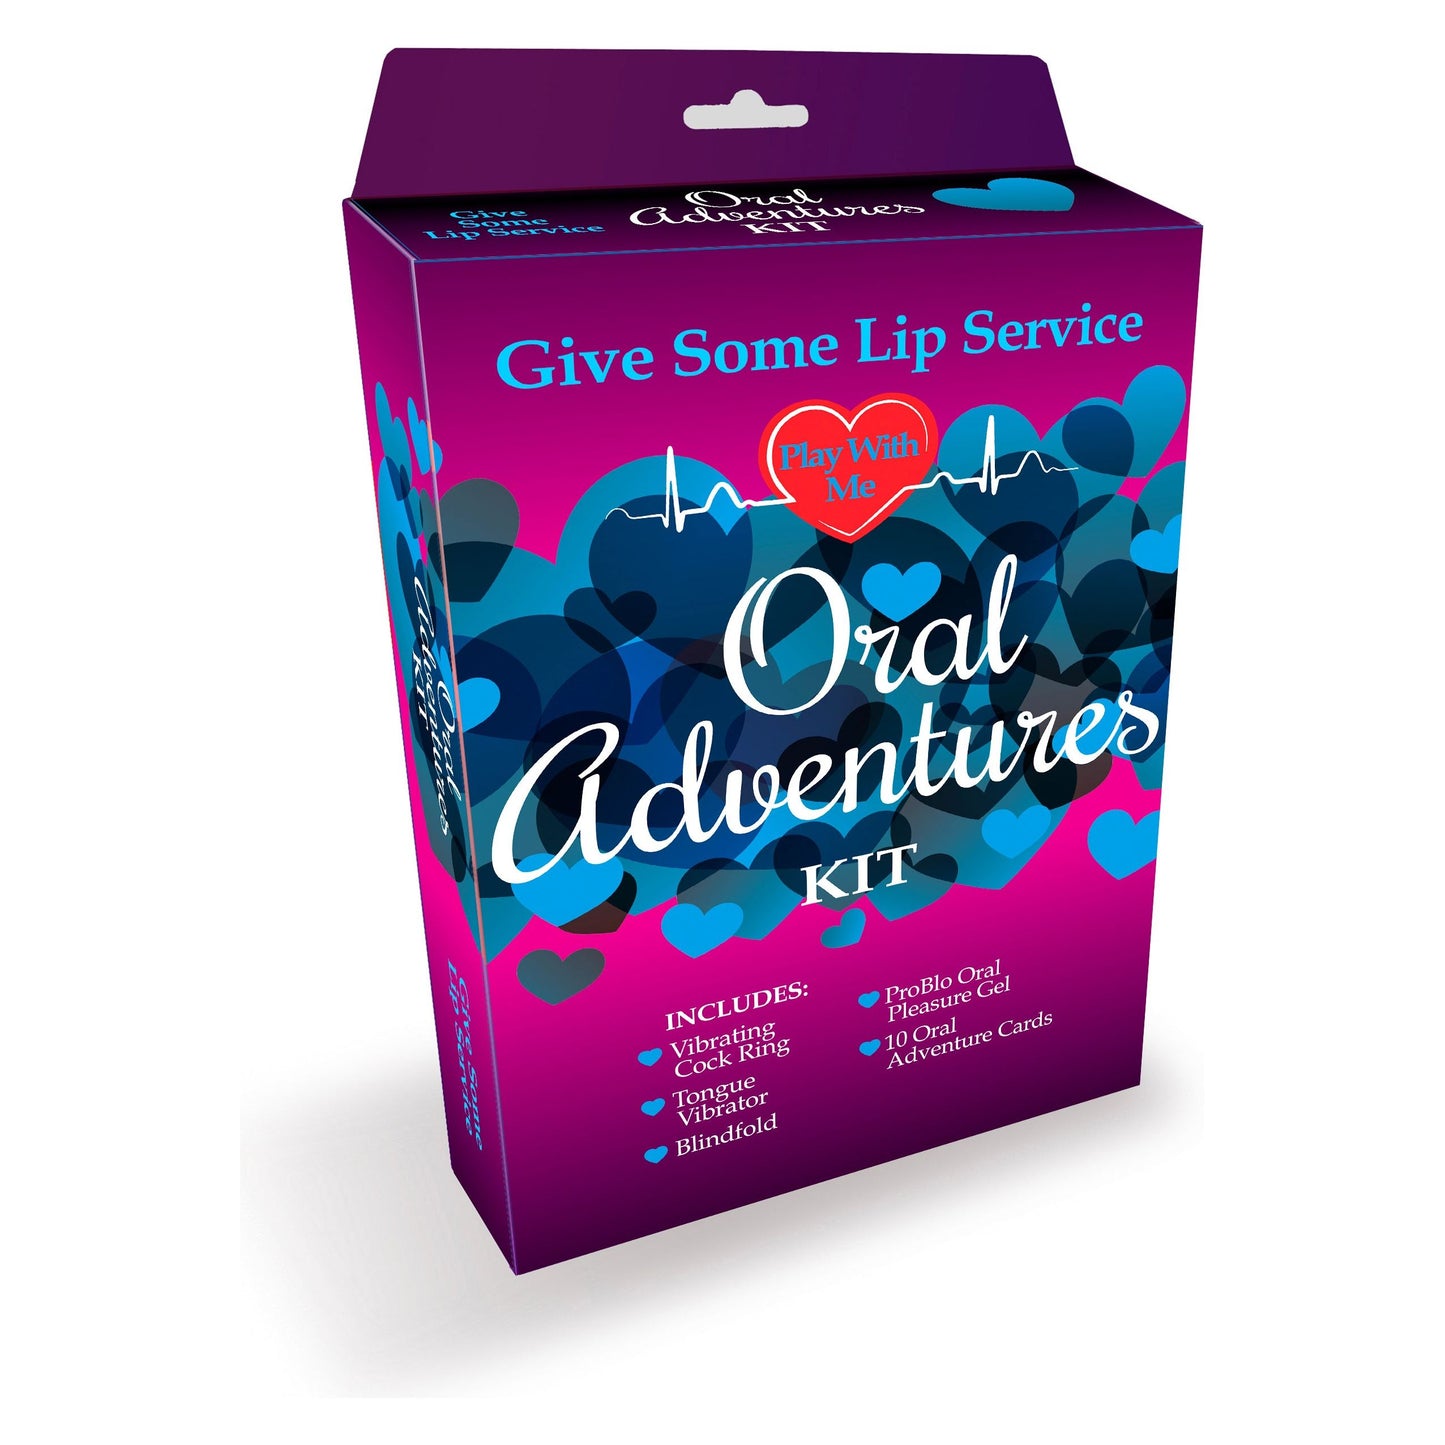 Oral Adventure Kit LG-PWM013